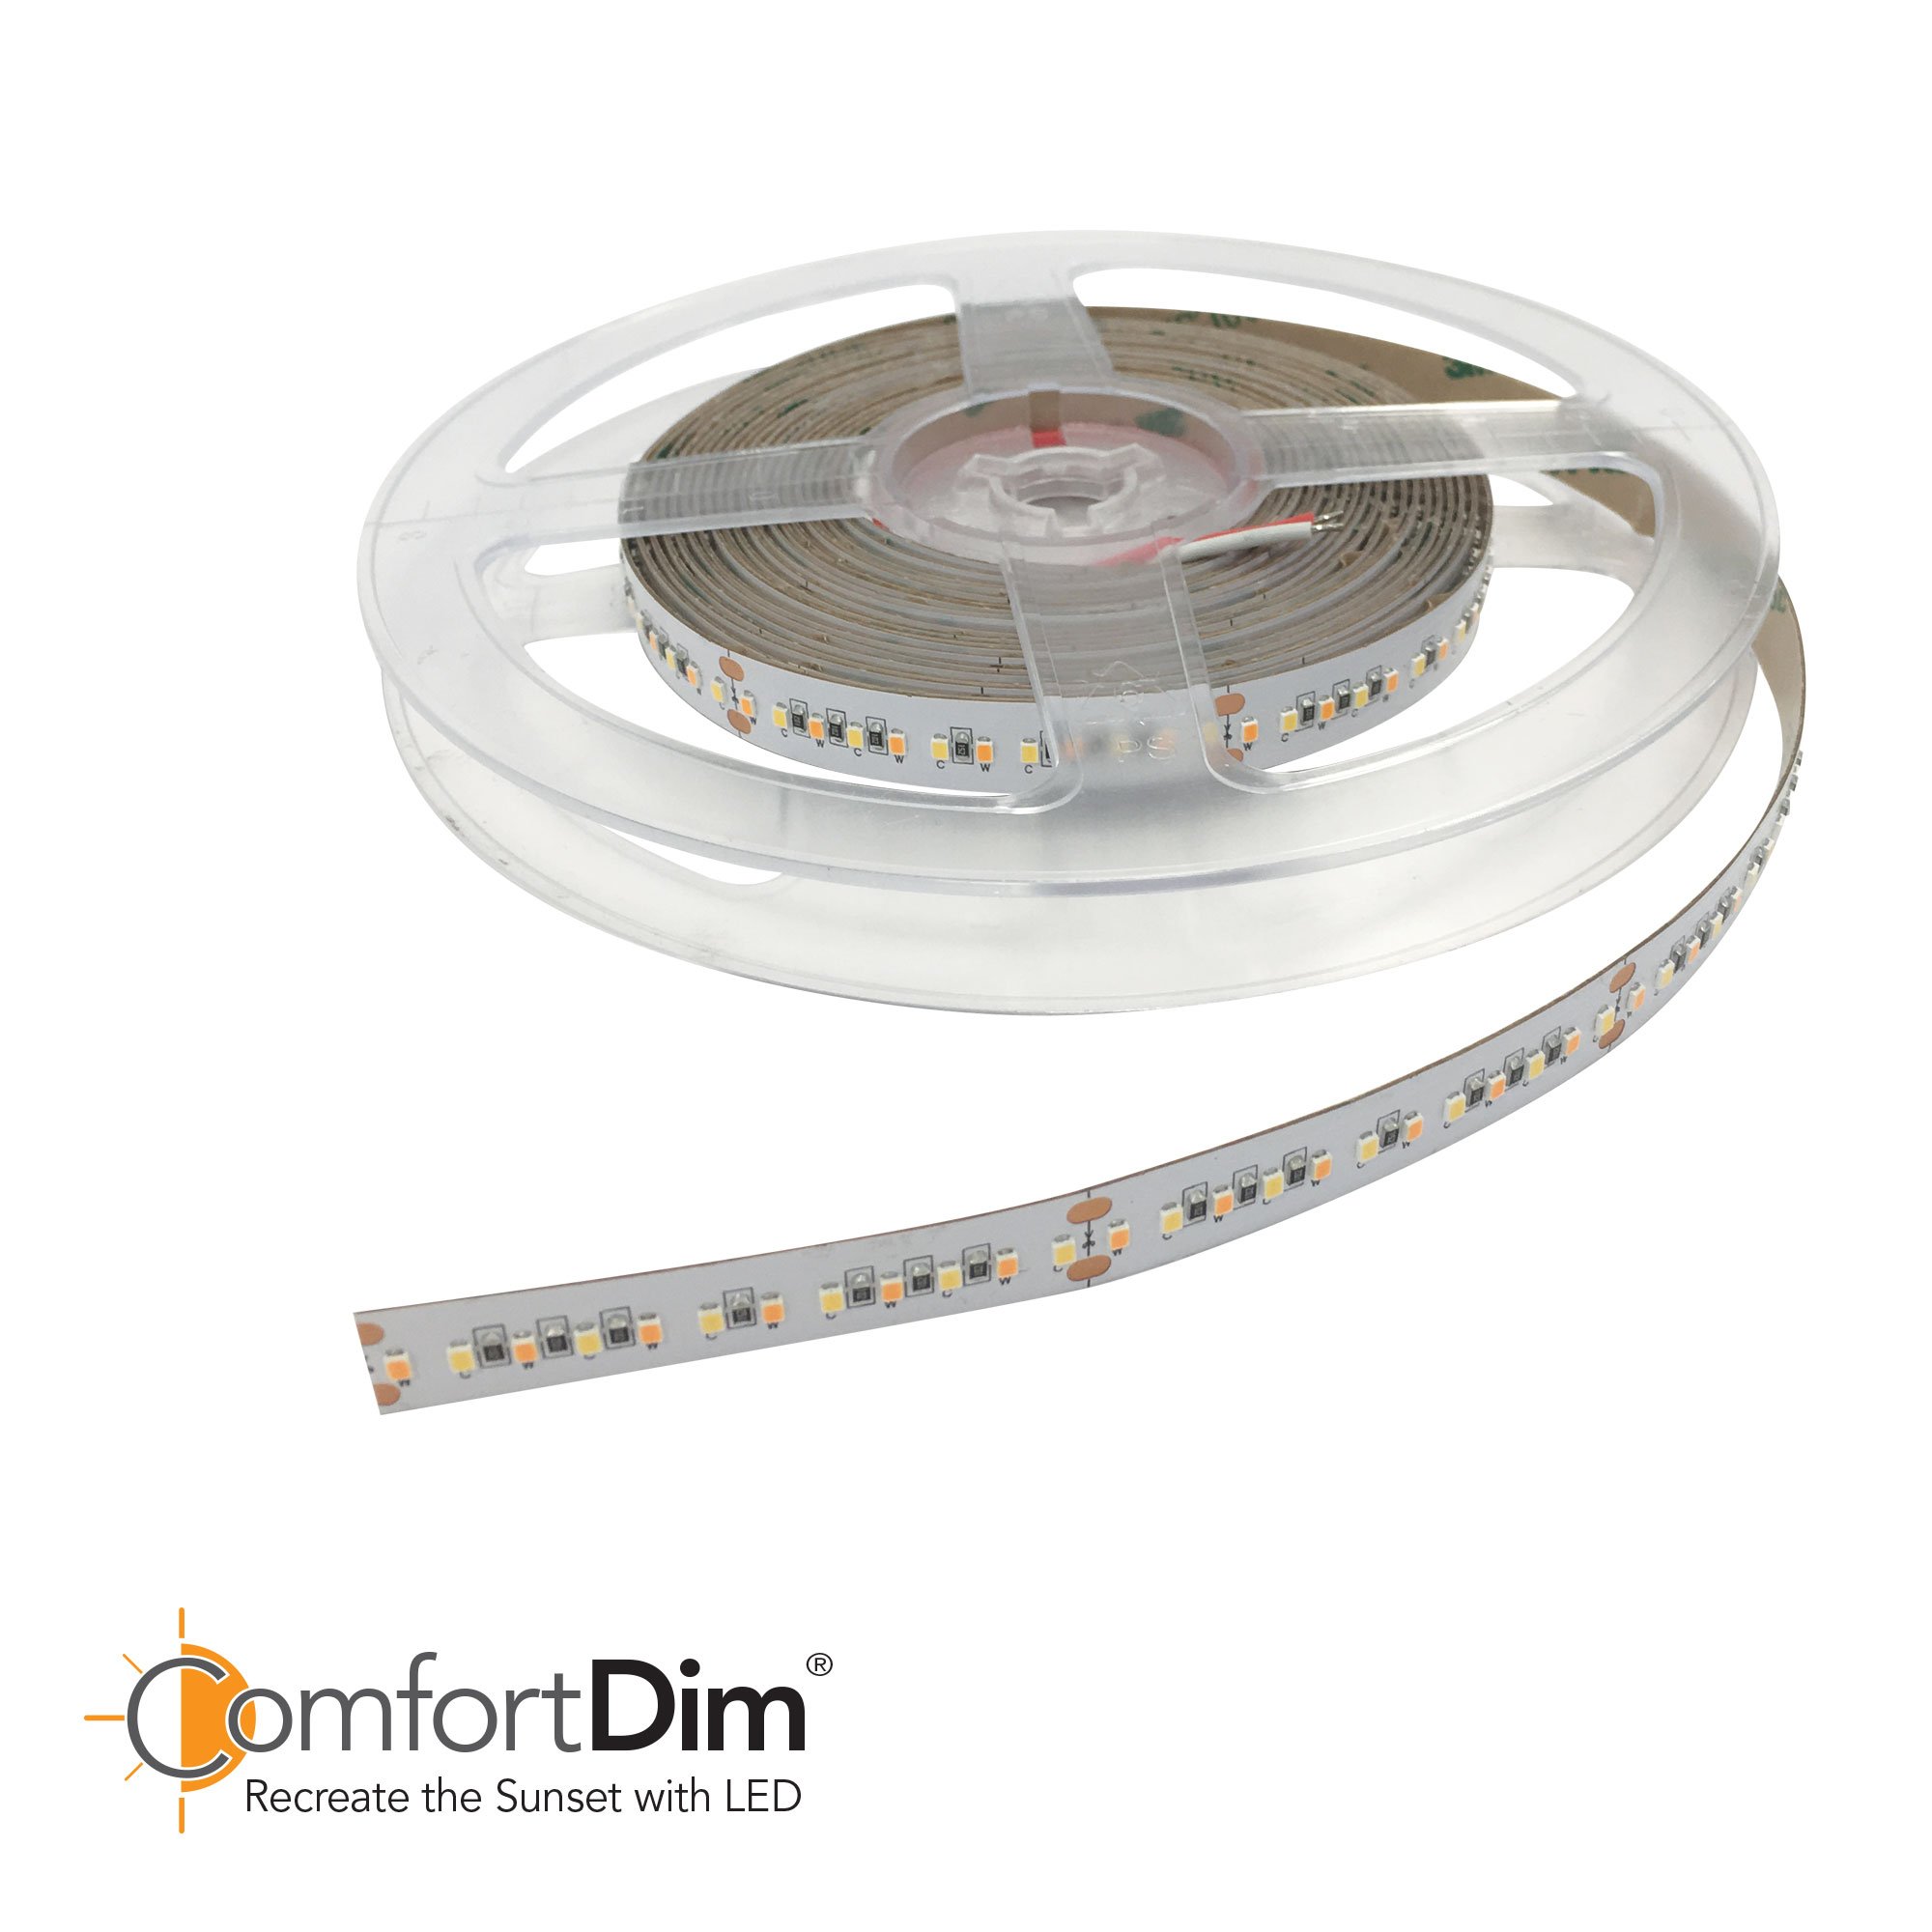 24V Comfort Dim Tape Light – 170lm per foot